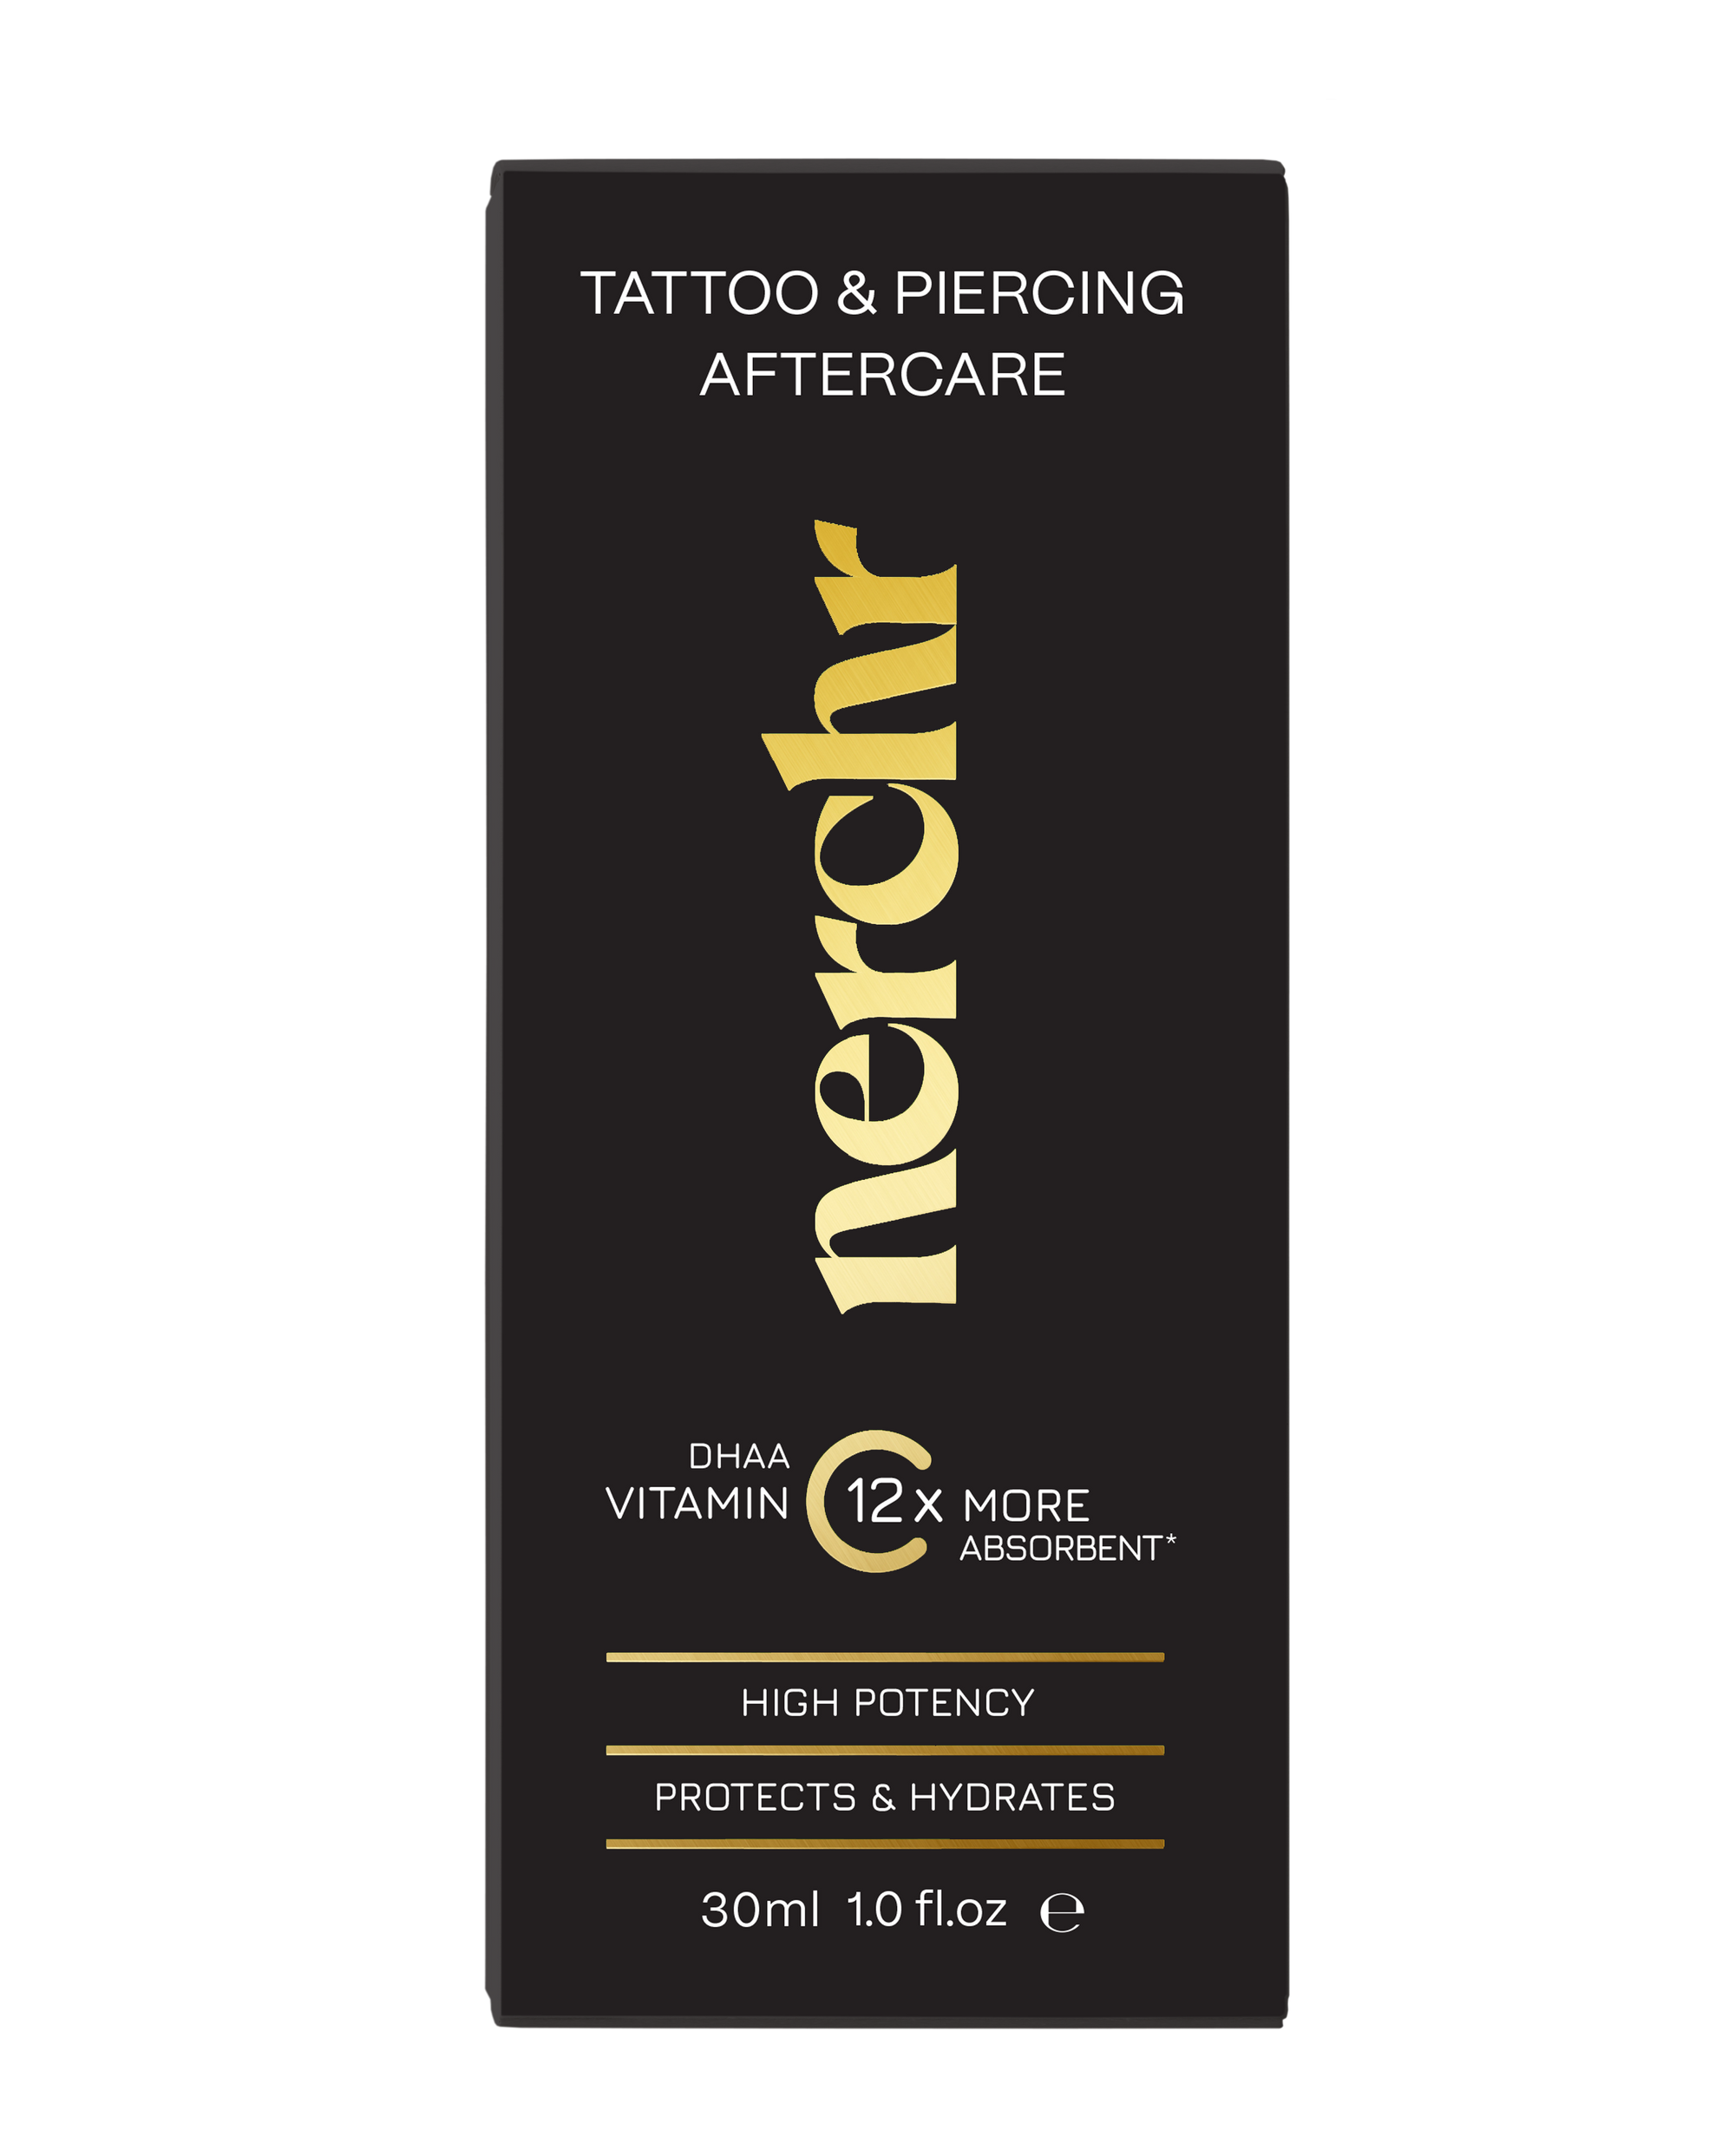 Nerchr Tattoo & Piercing Aftercare - 30mL 1.0 fl.oz